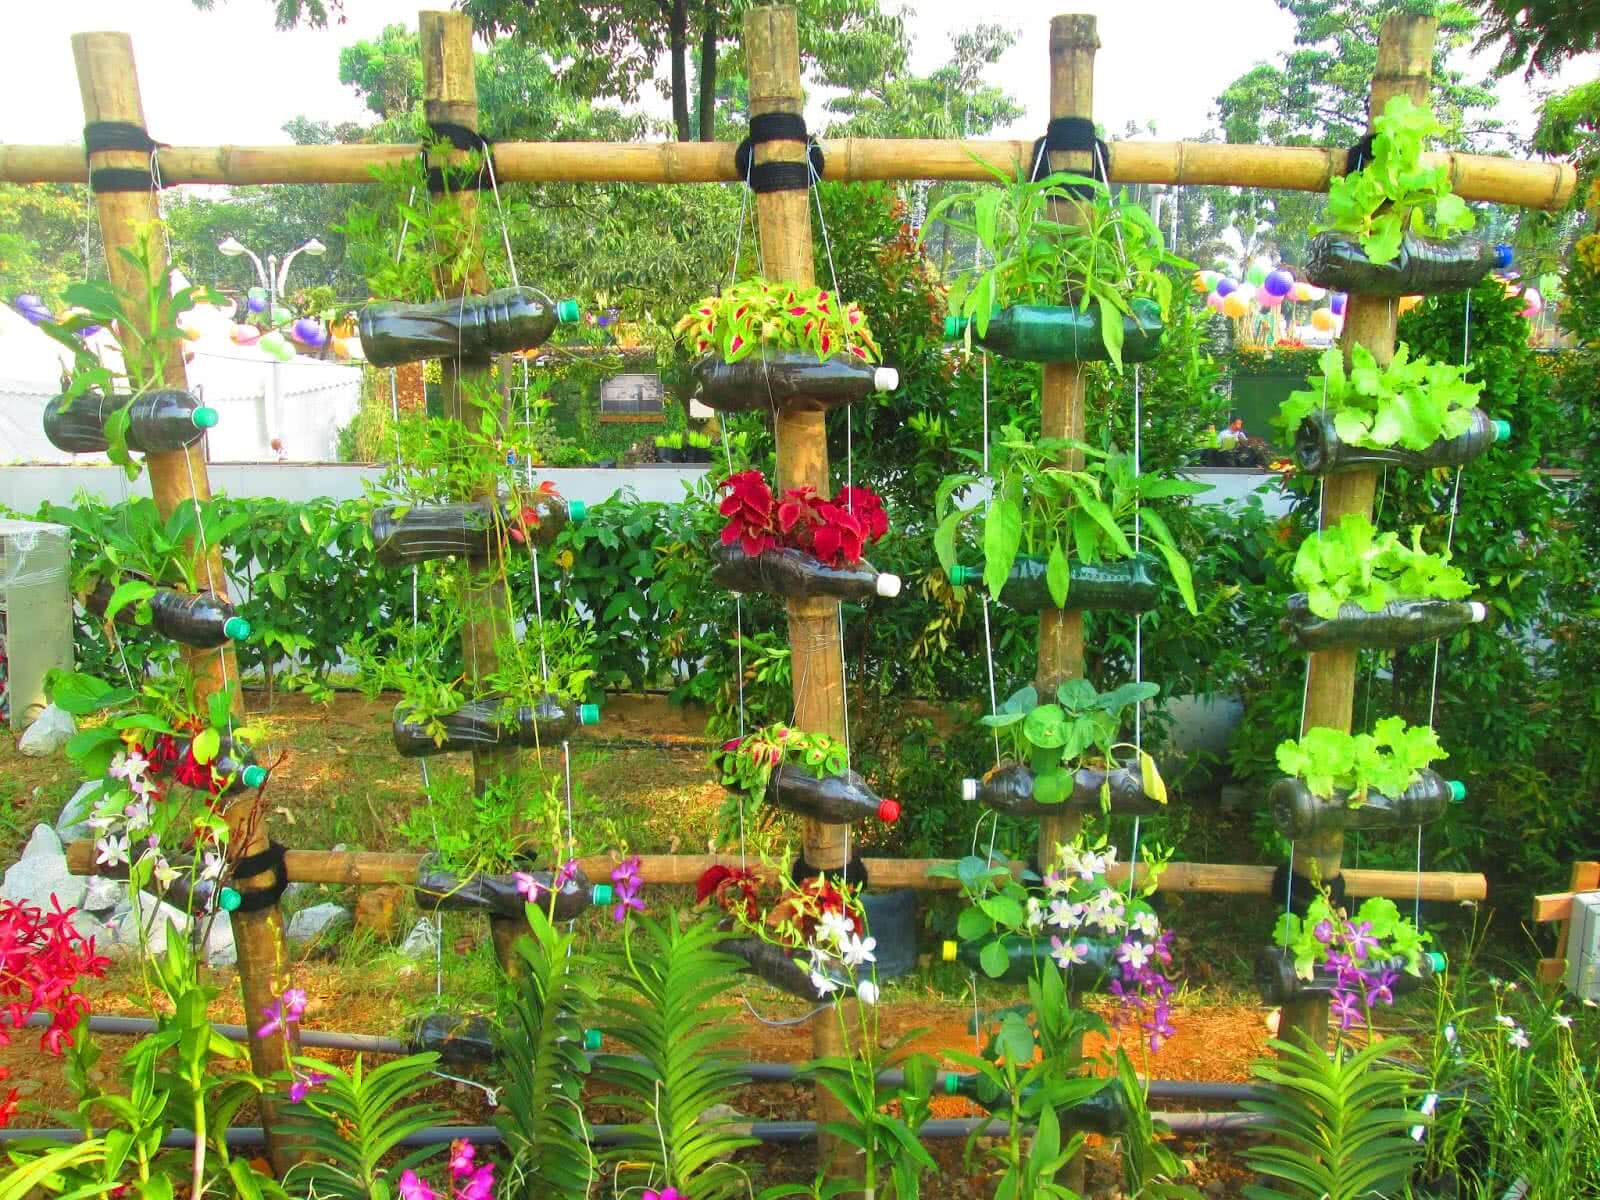 A creative plastic bottle garden showcasing various repurposed bottle planters in an urban setting